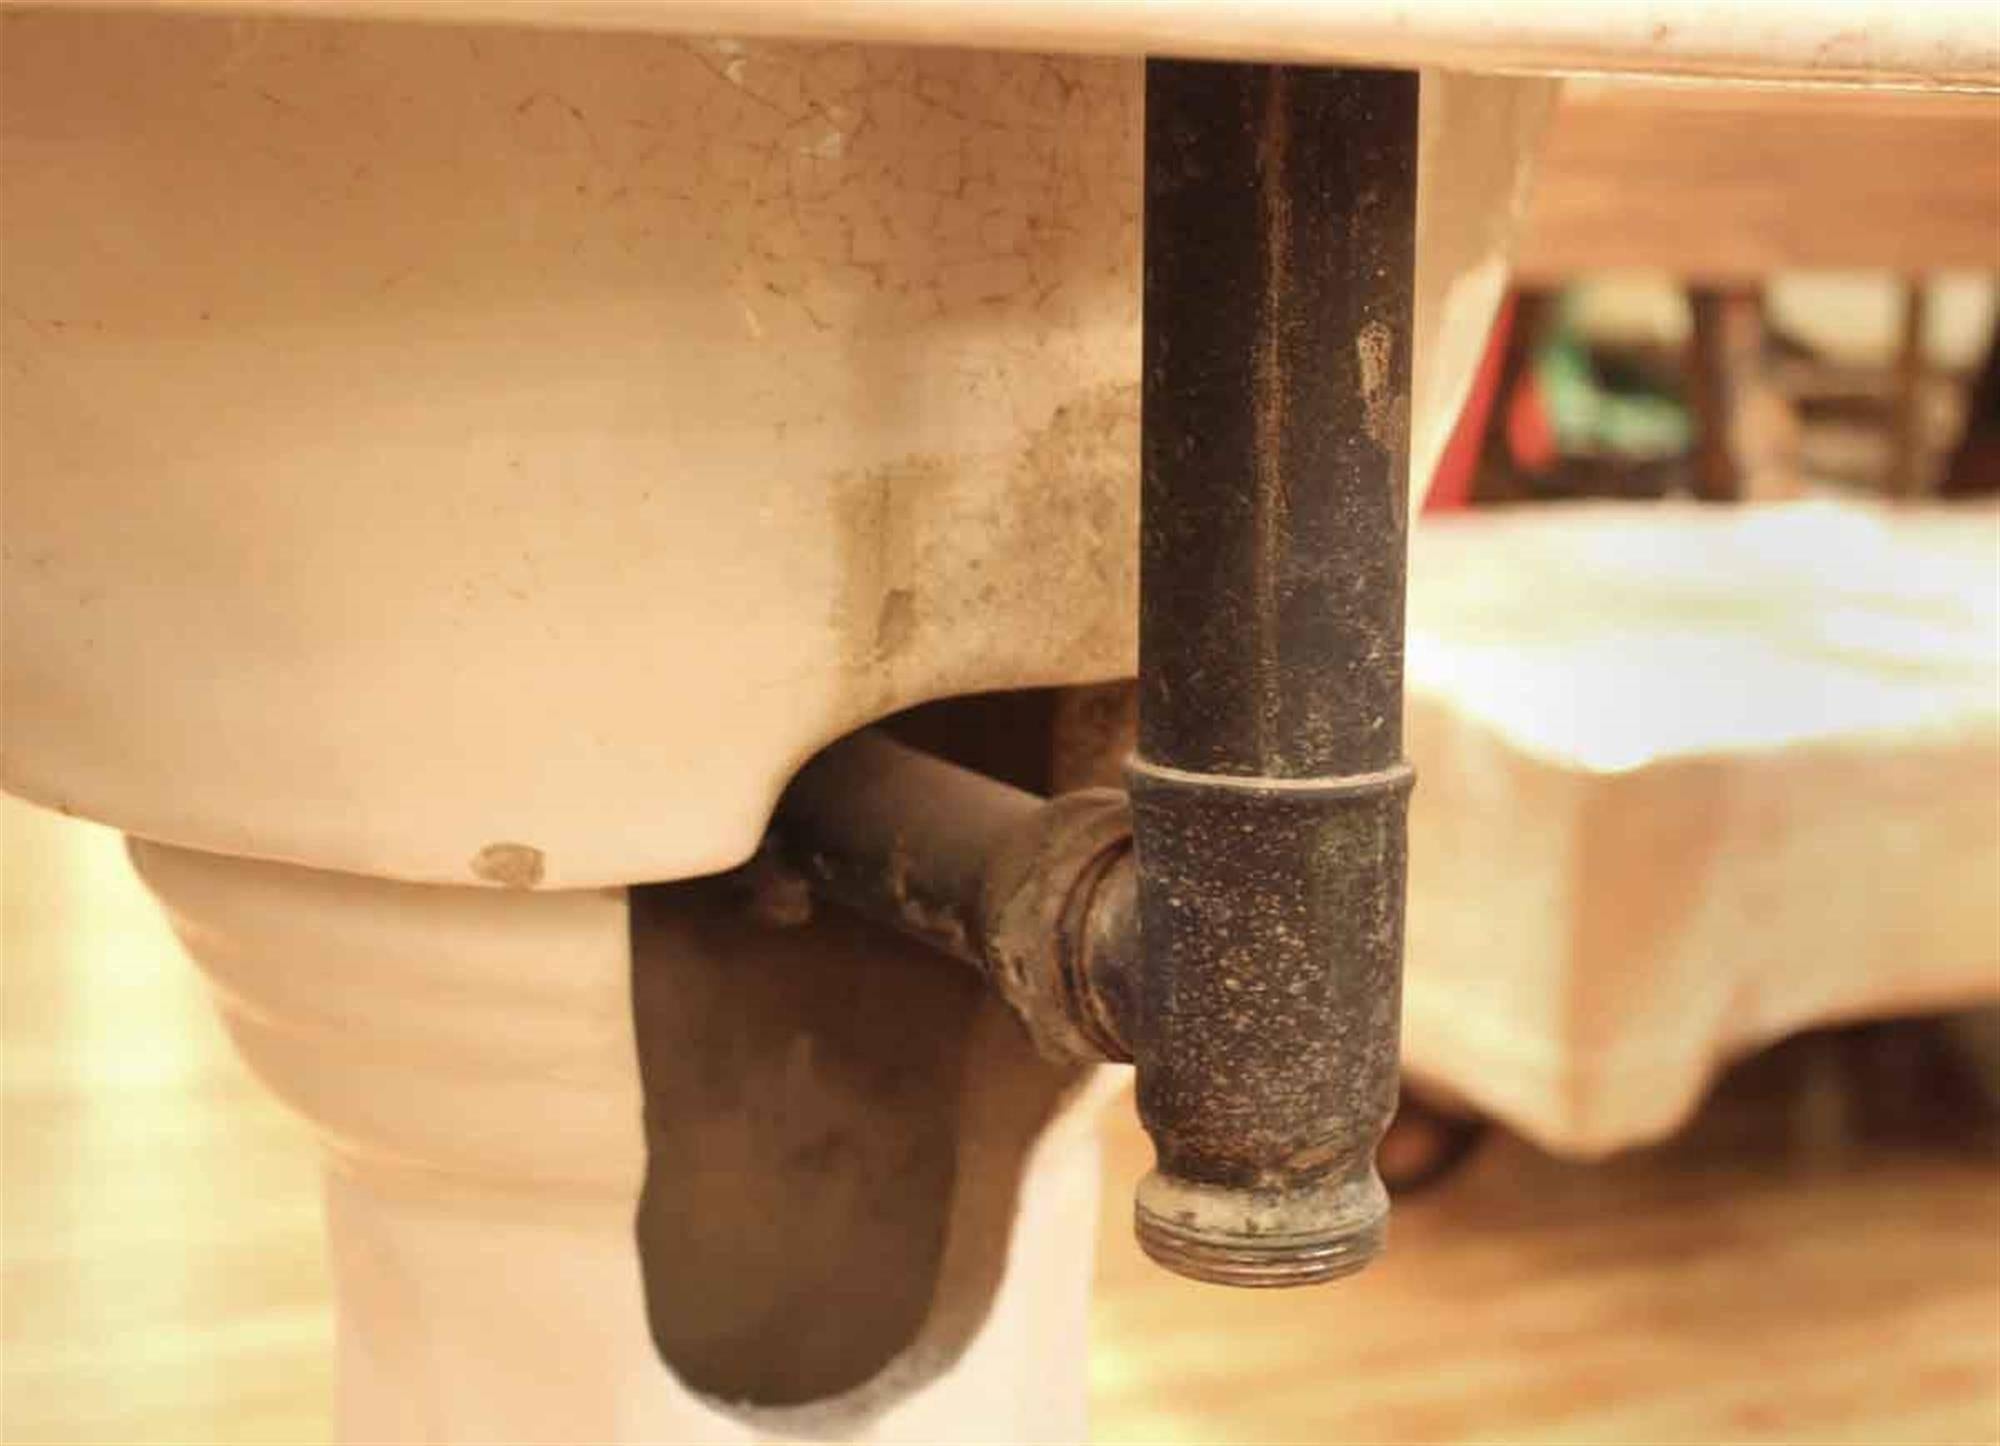 American 1900s Earthenware Pedestal Oval Sink with Back Splash and Original Hardware